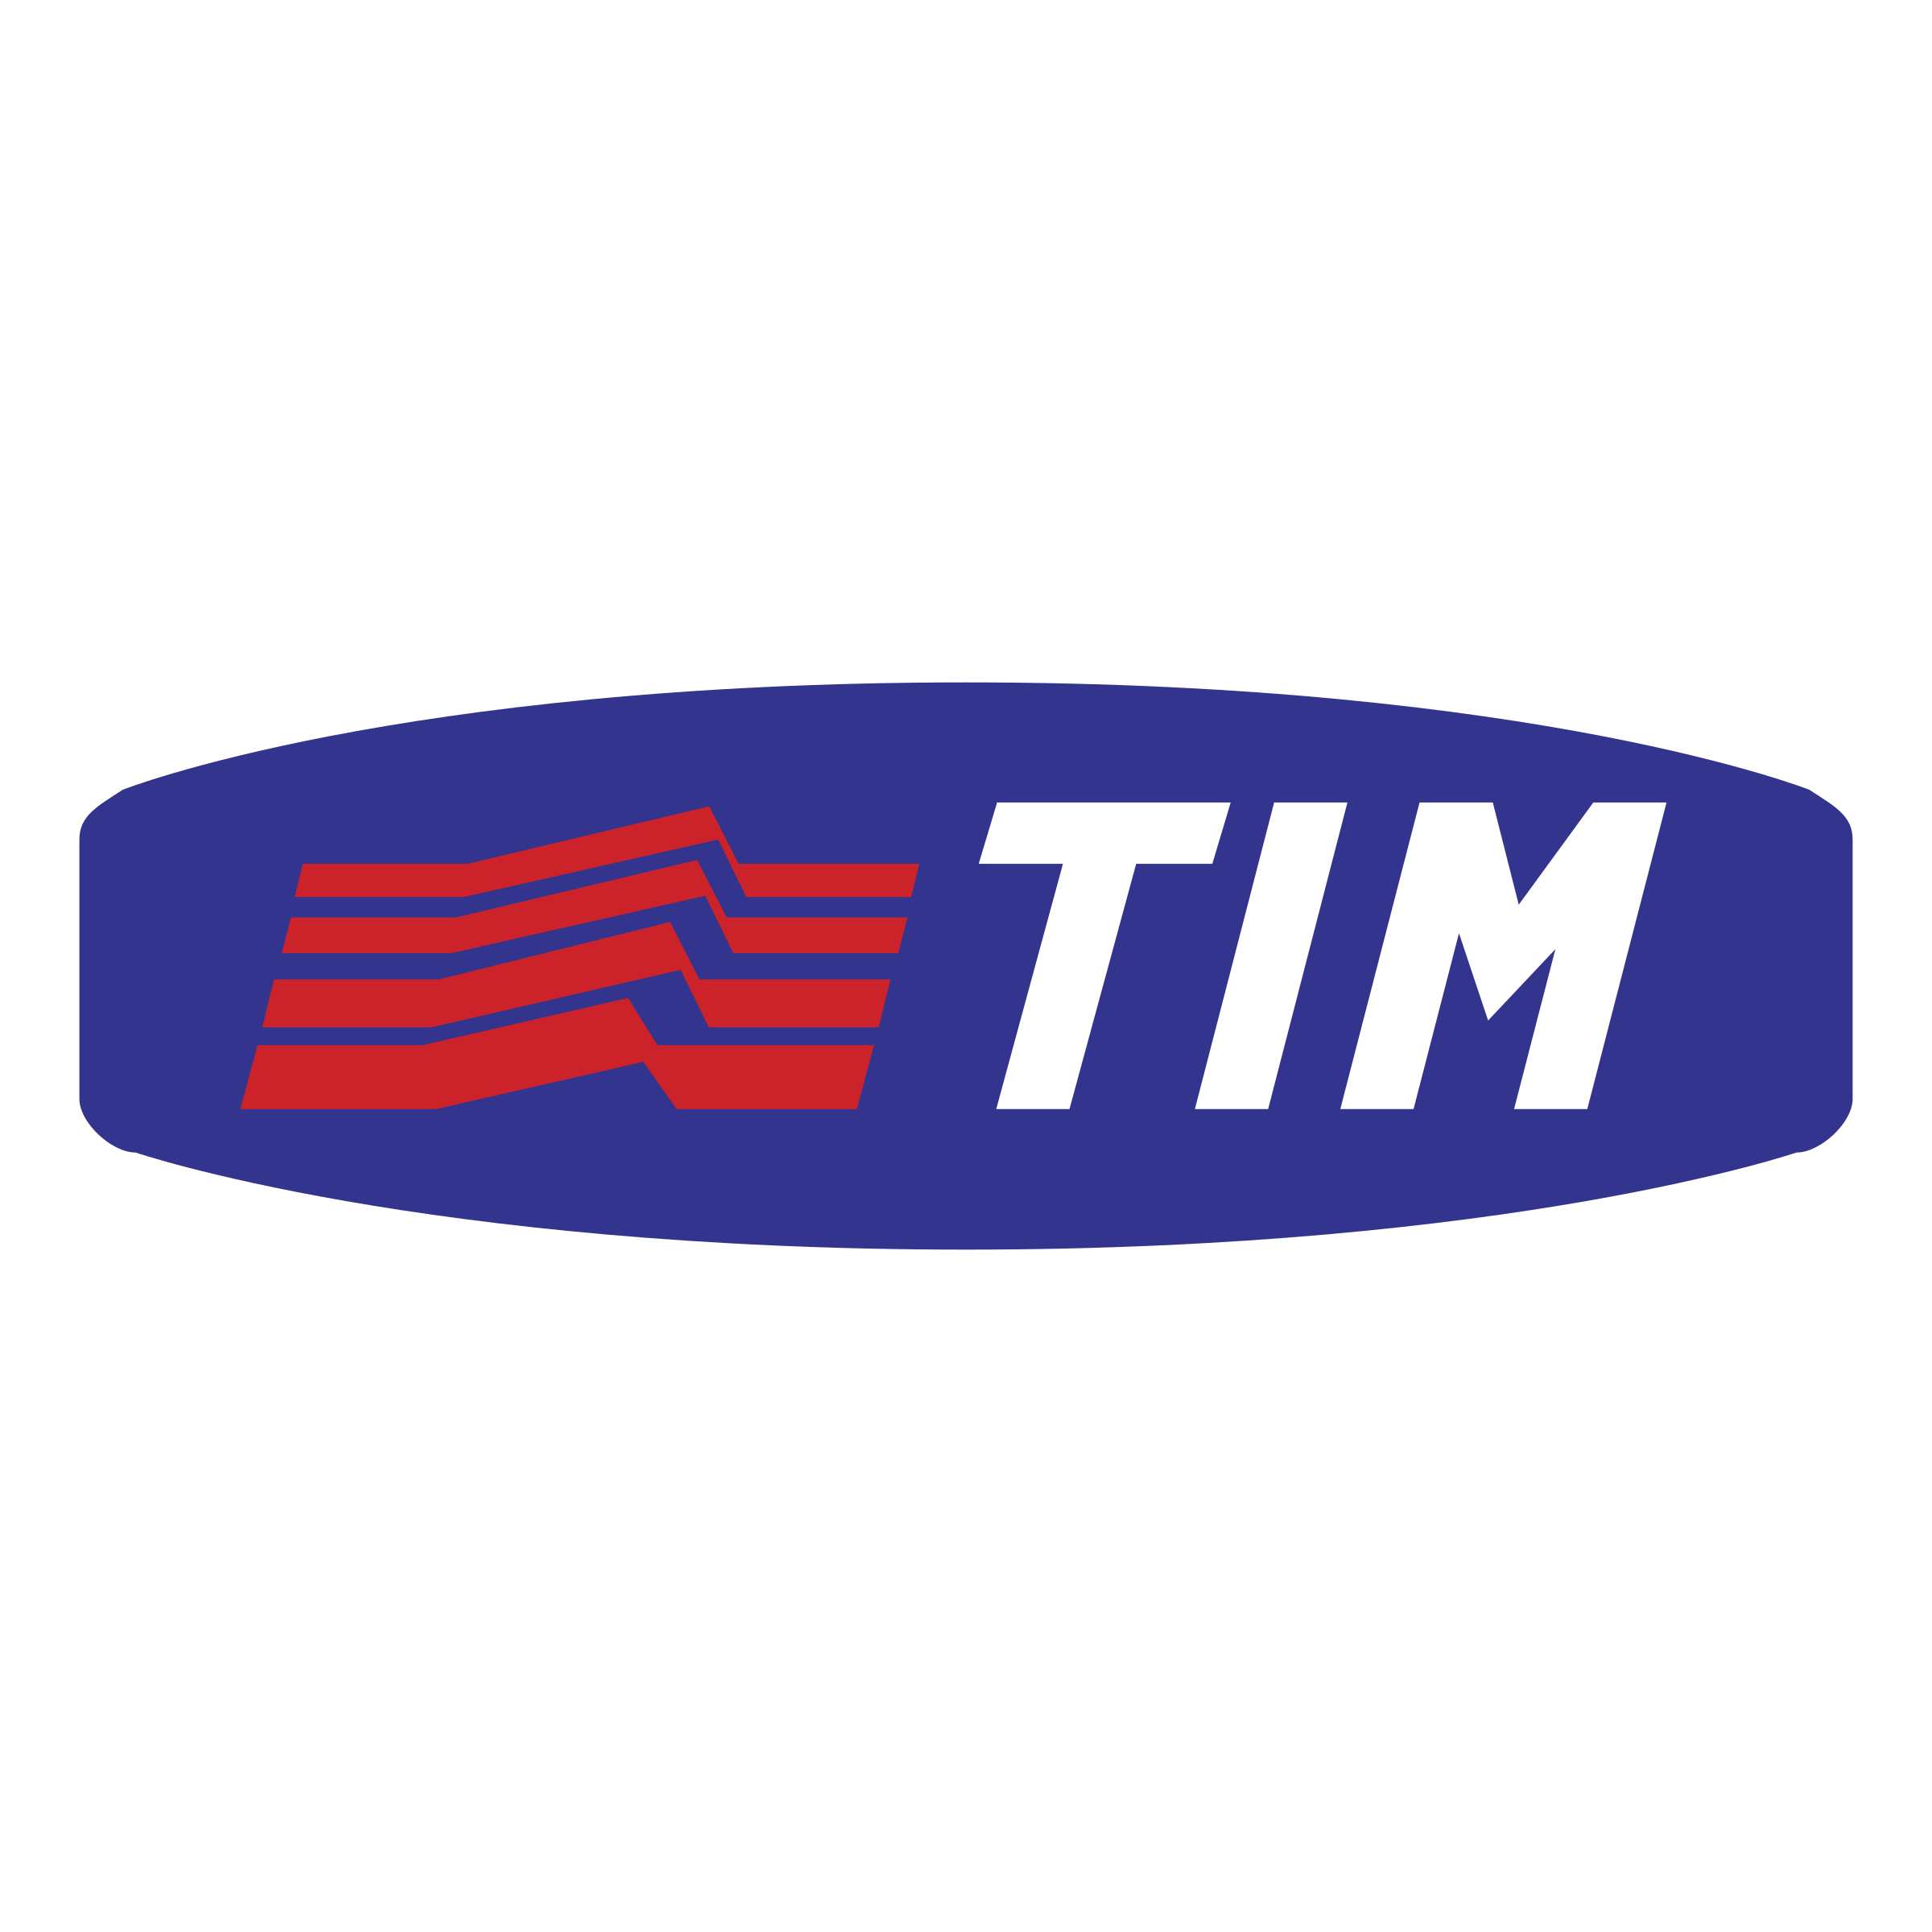 Tim Logo - TIM Logo PNG Transparent & SVG Vector - Freebie Supply